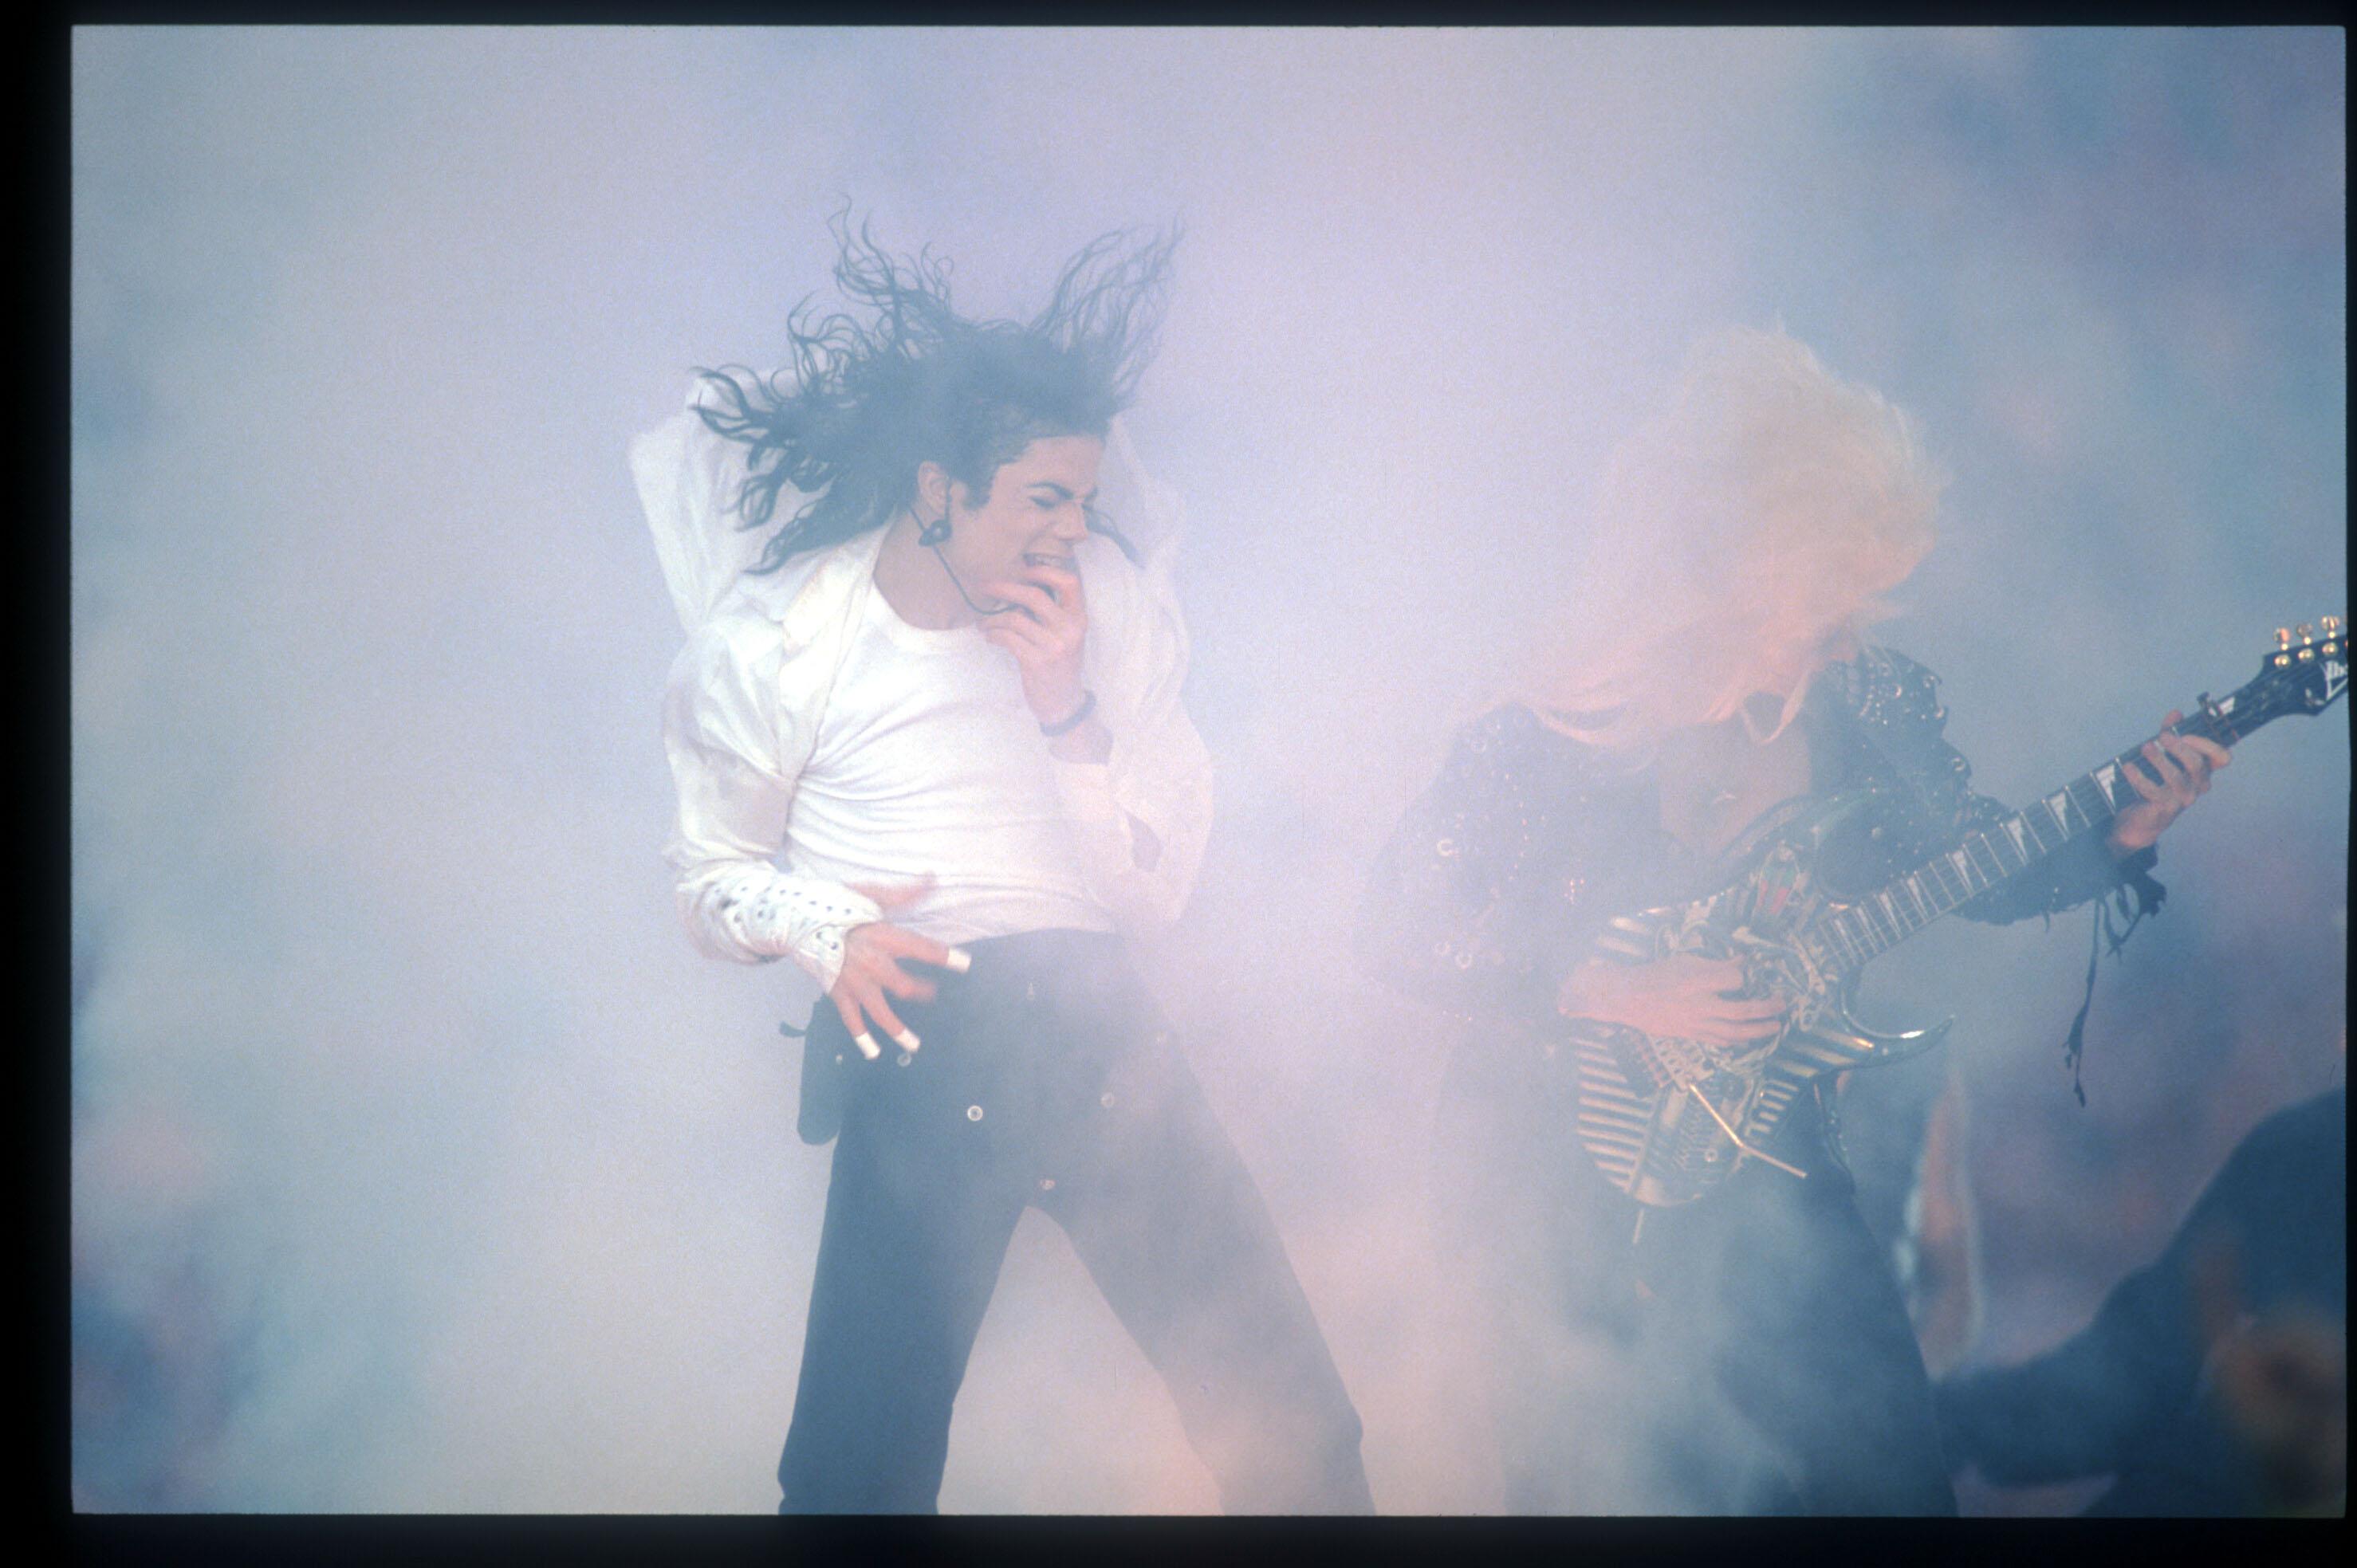 Michael Jackson Performs At Super Bowl XXVII